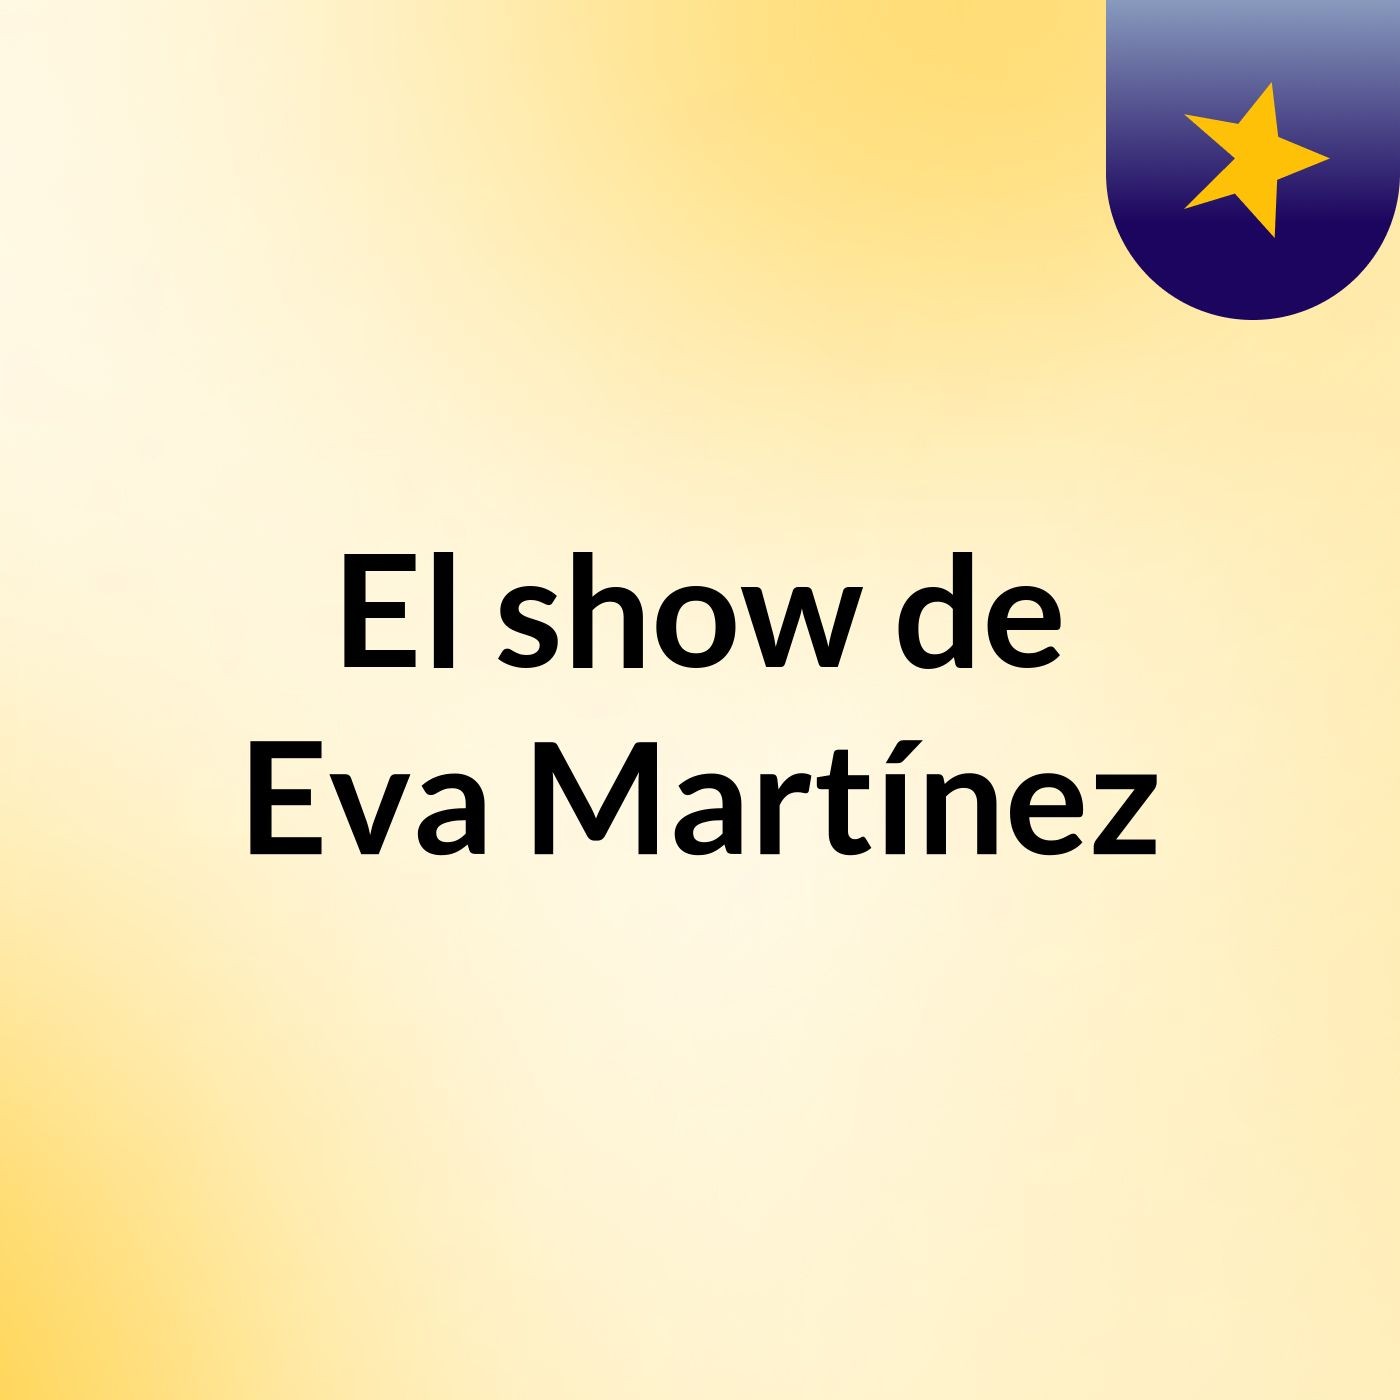 El show de Eva Martínez